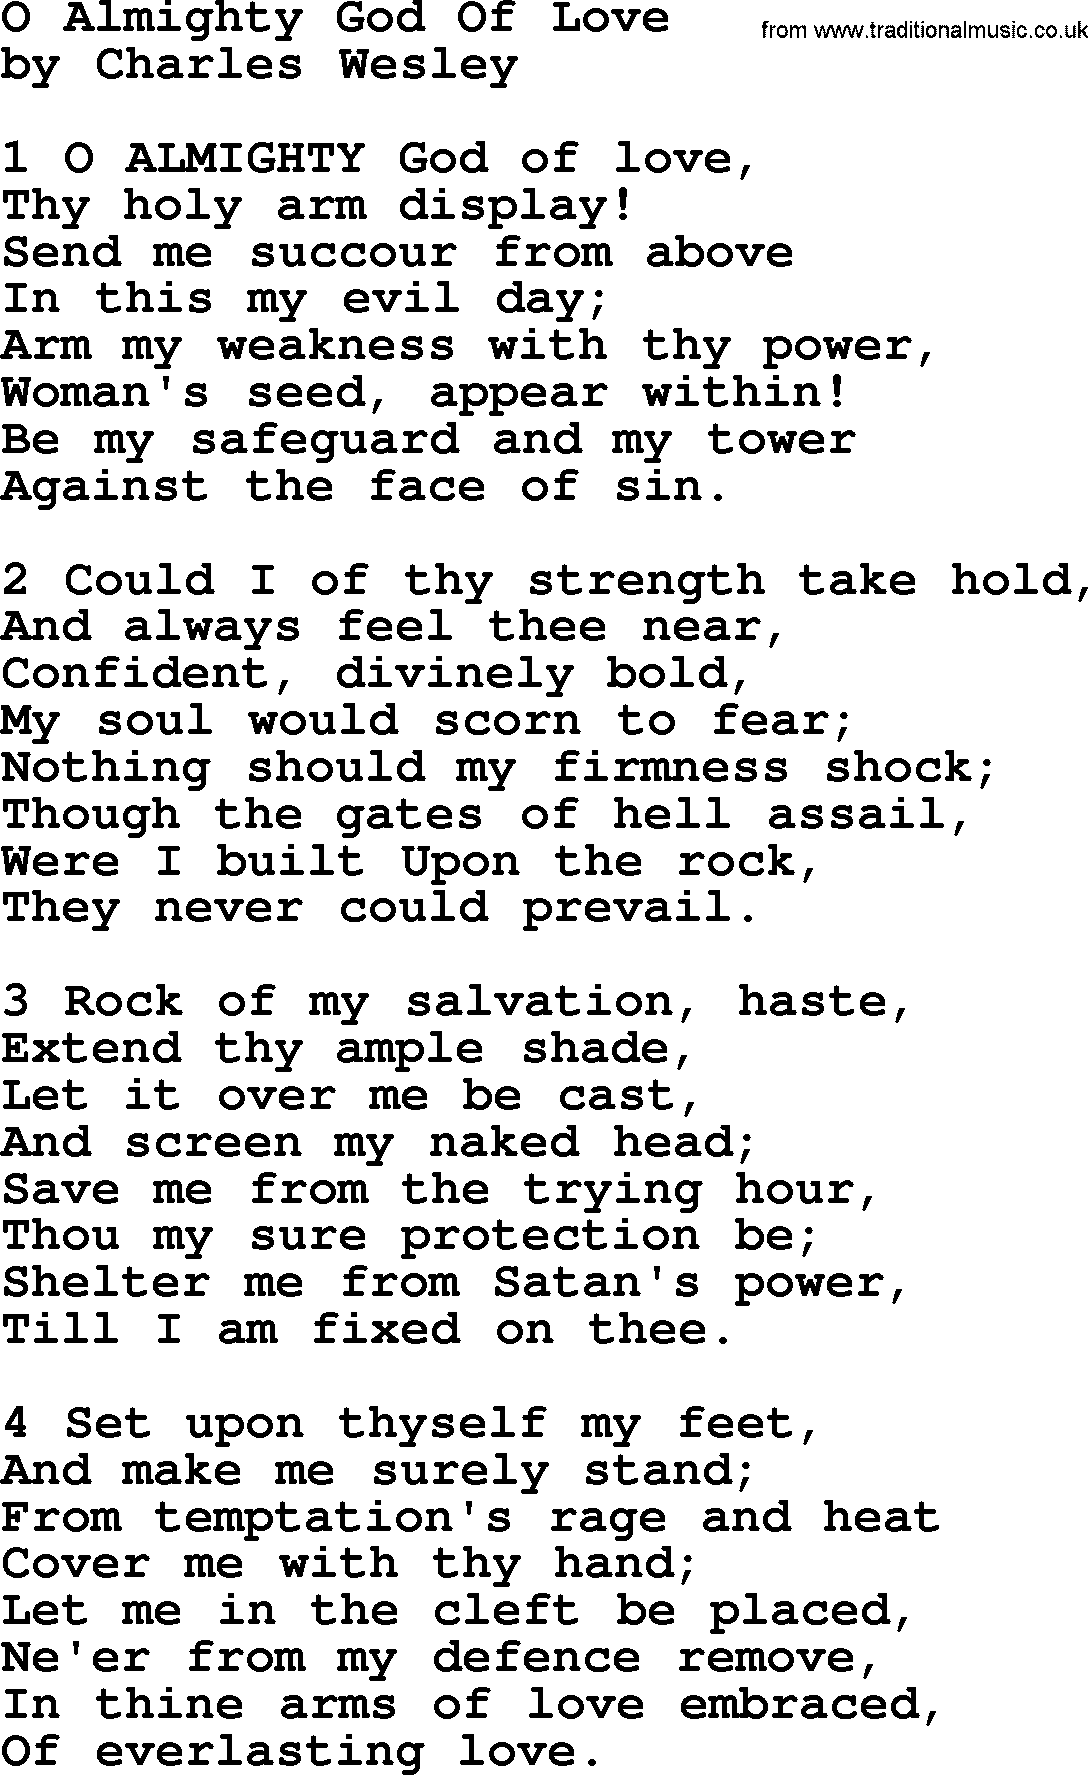 Charles Wesley hymn: O Almighty God Of Love, lyrics